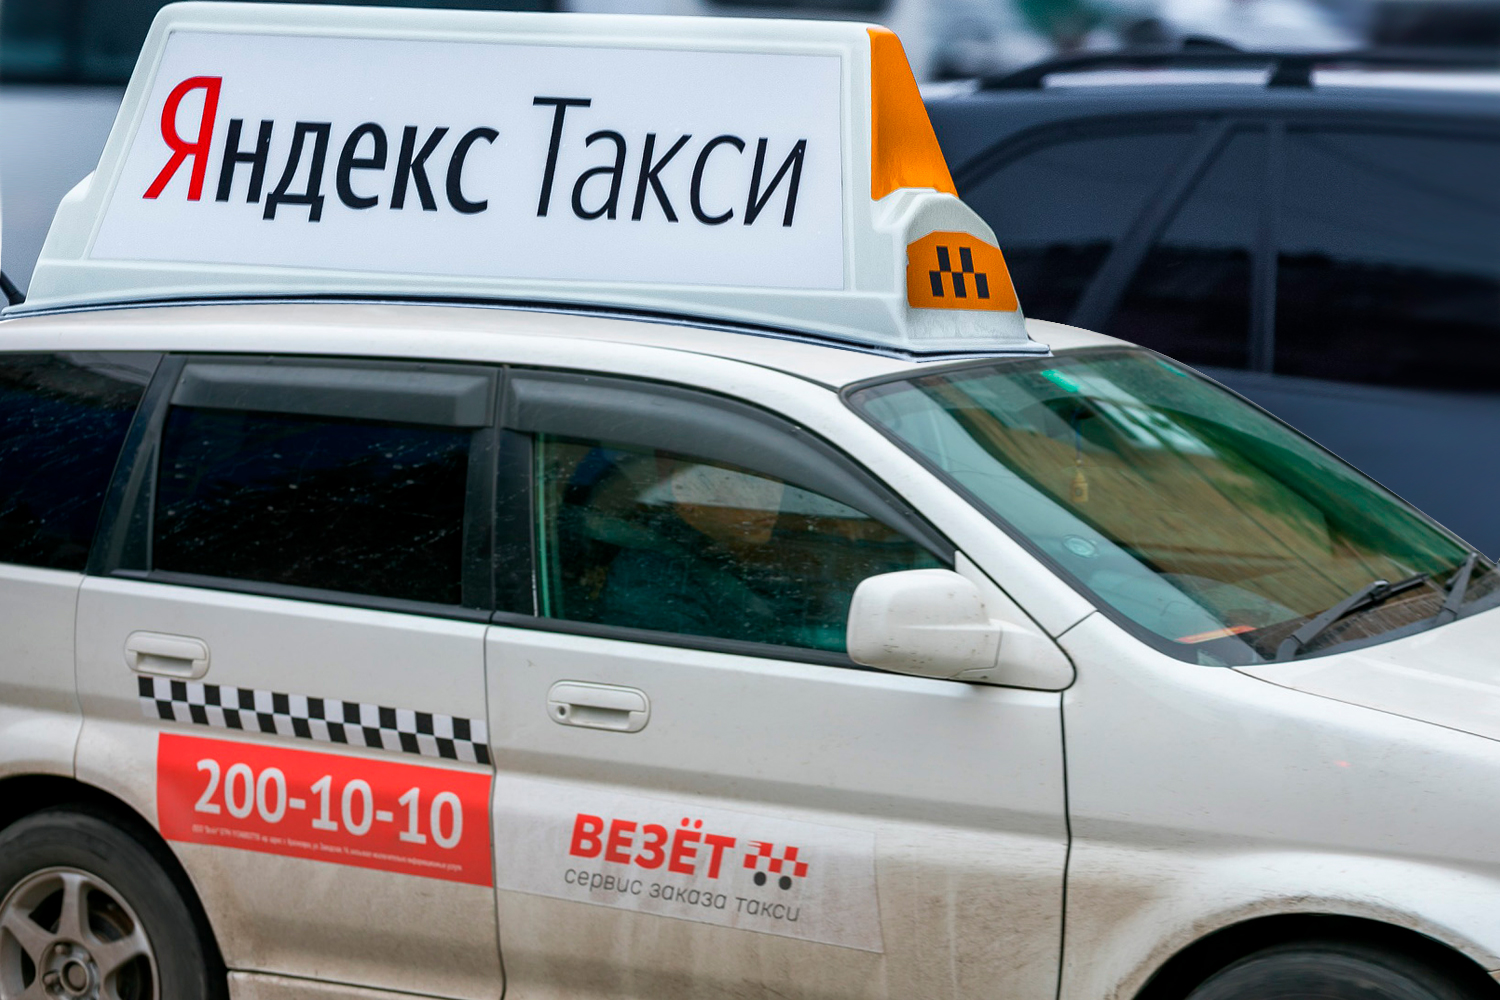 Яндекс такси купил везет